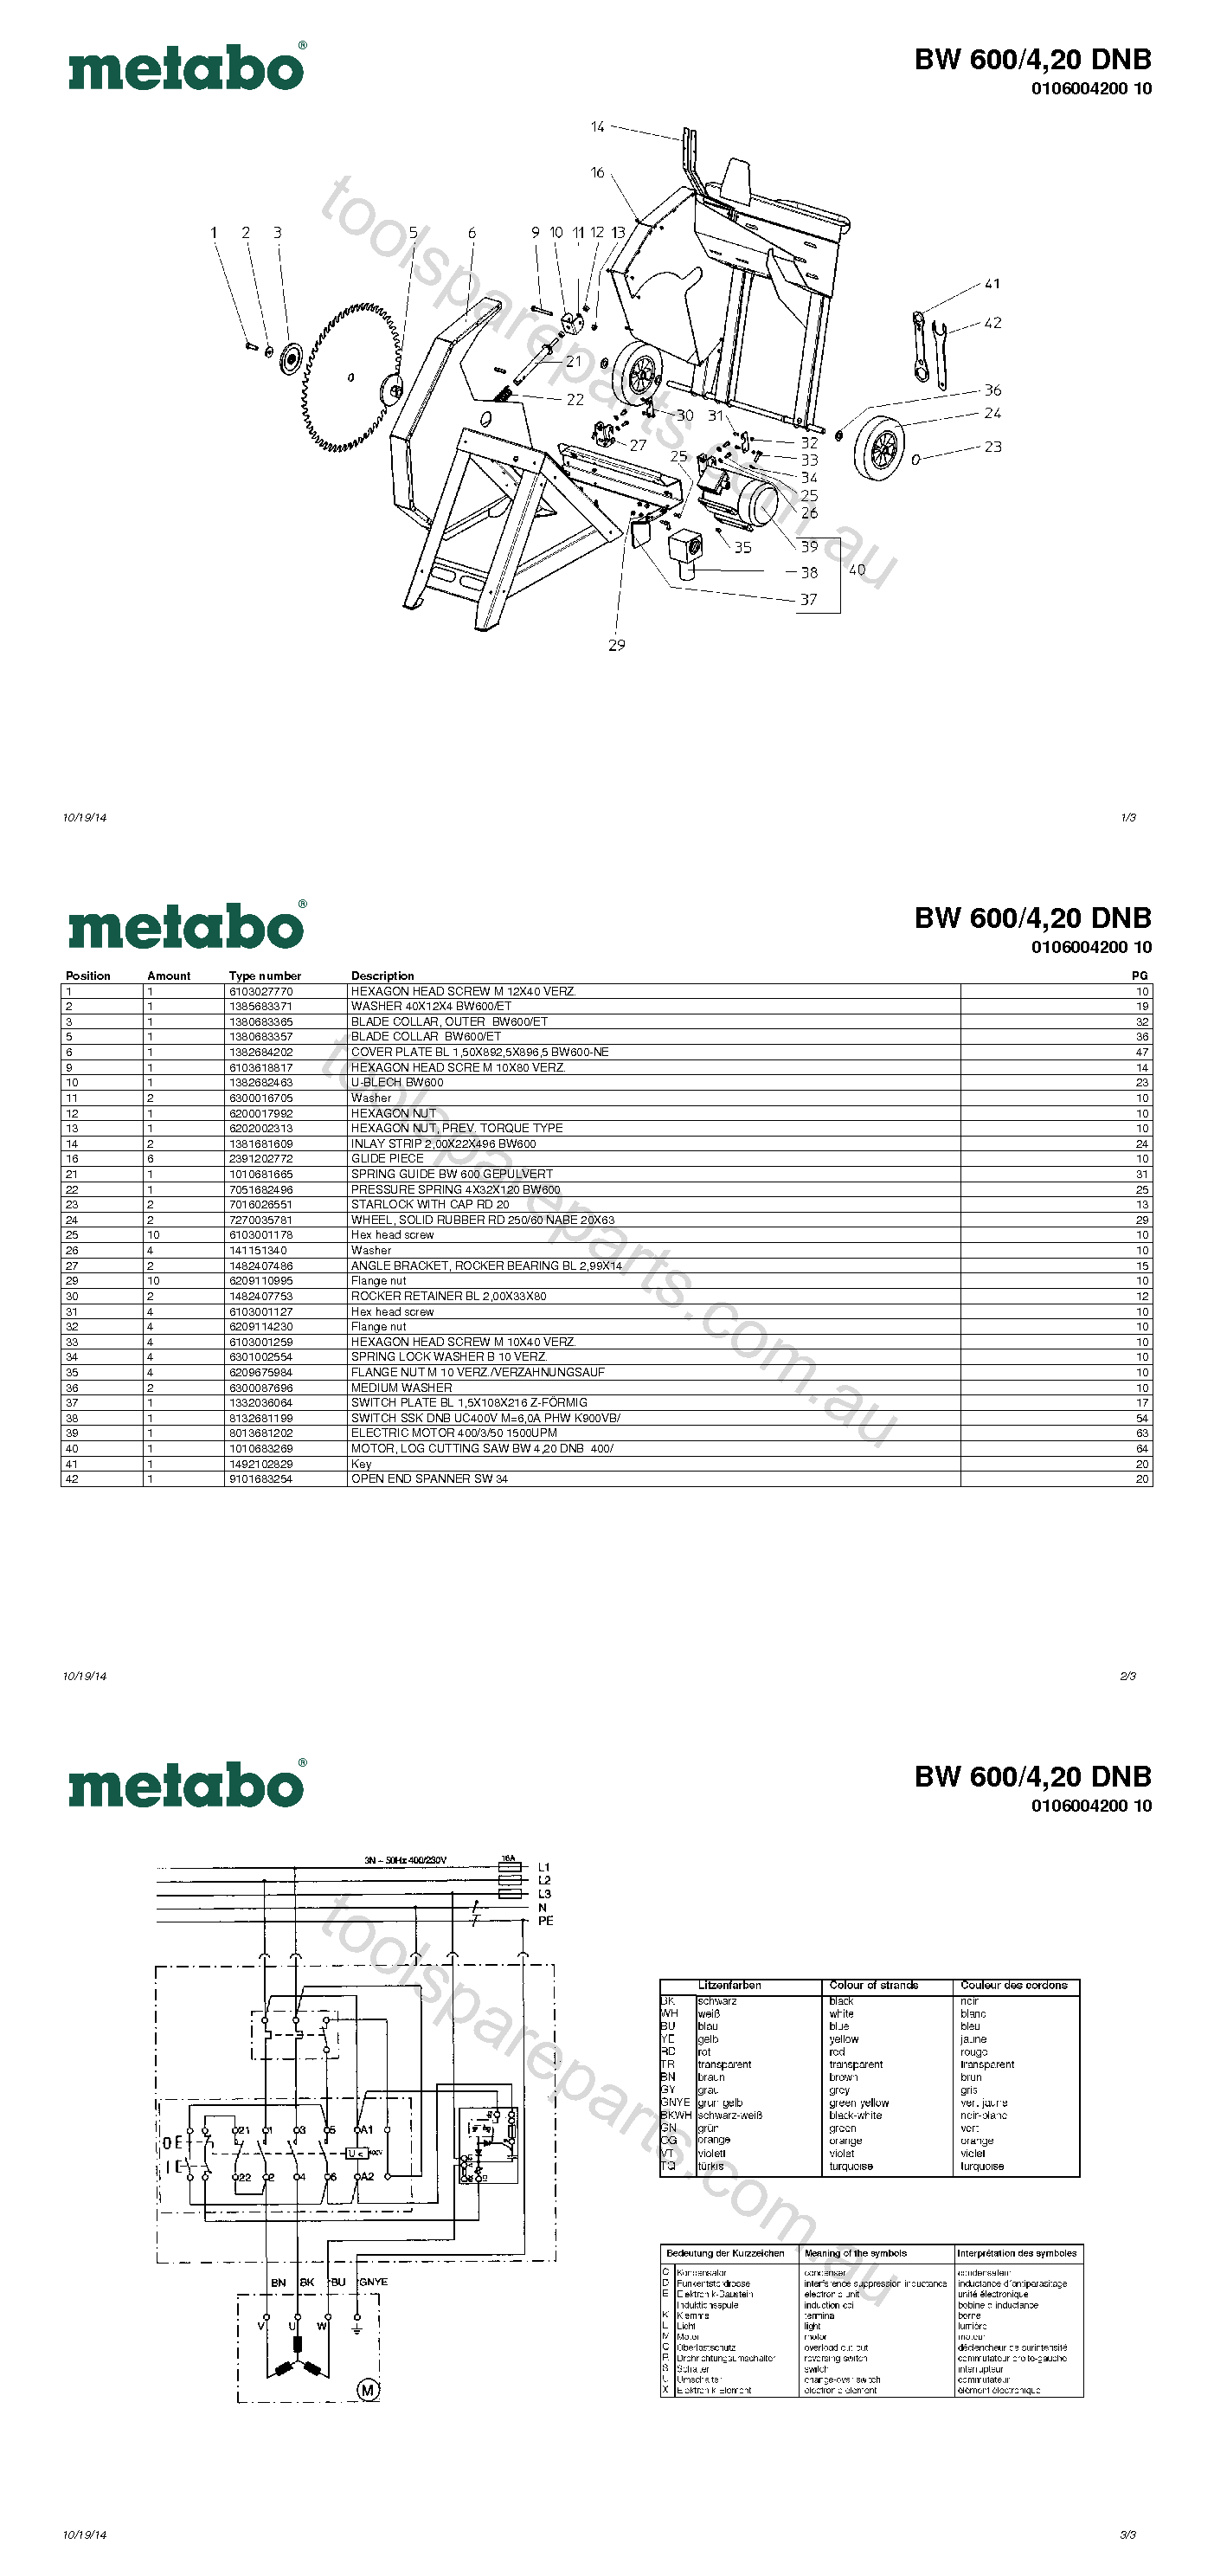 Metabo BW 600/4,20 DNB 0106004200 10  Diagram 1